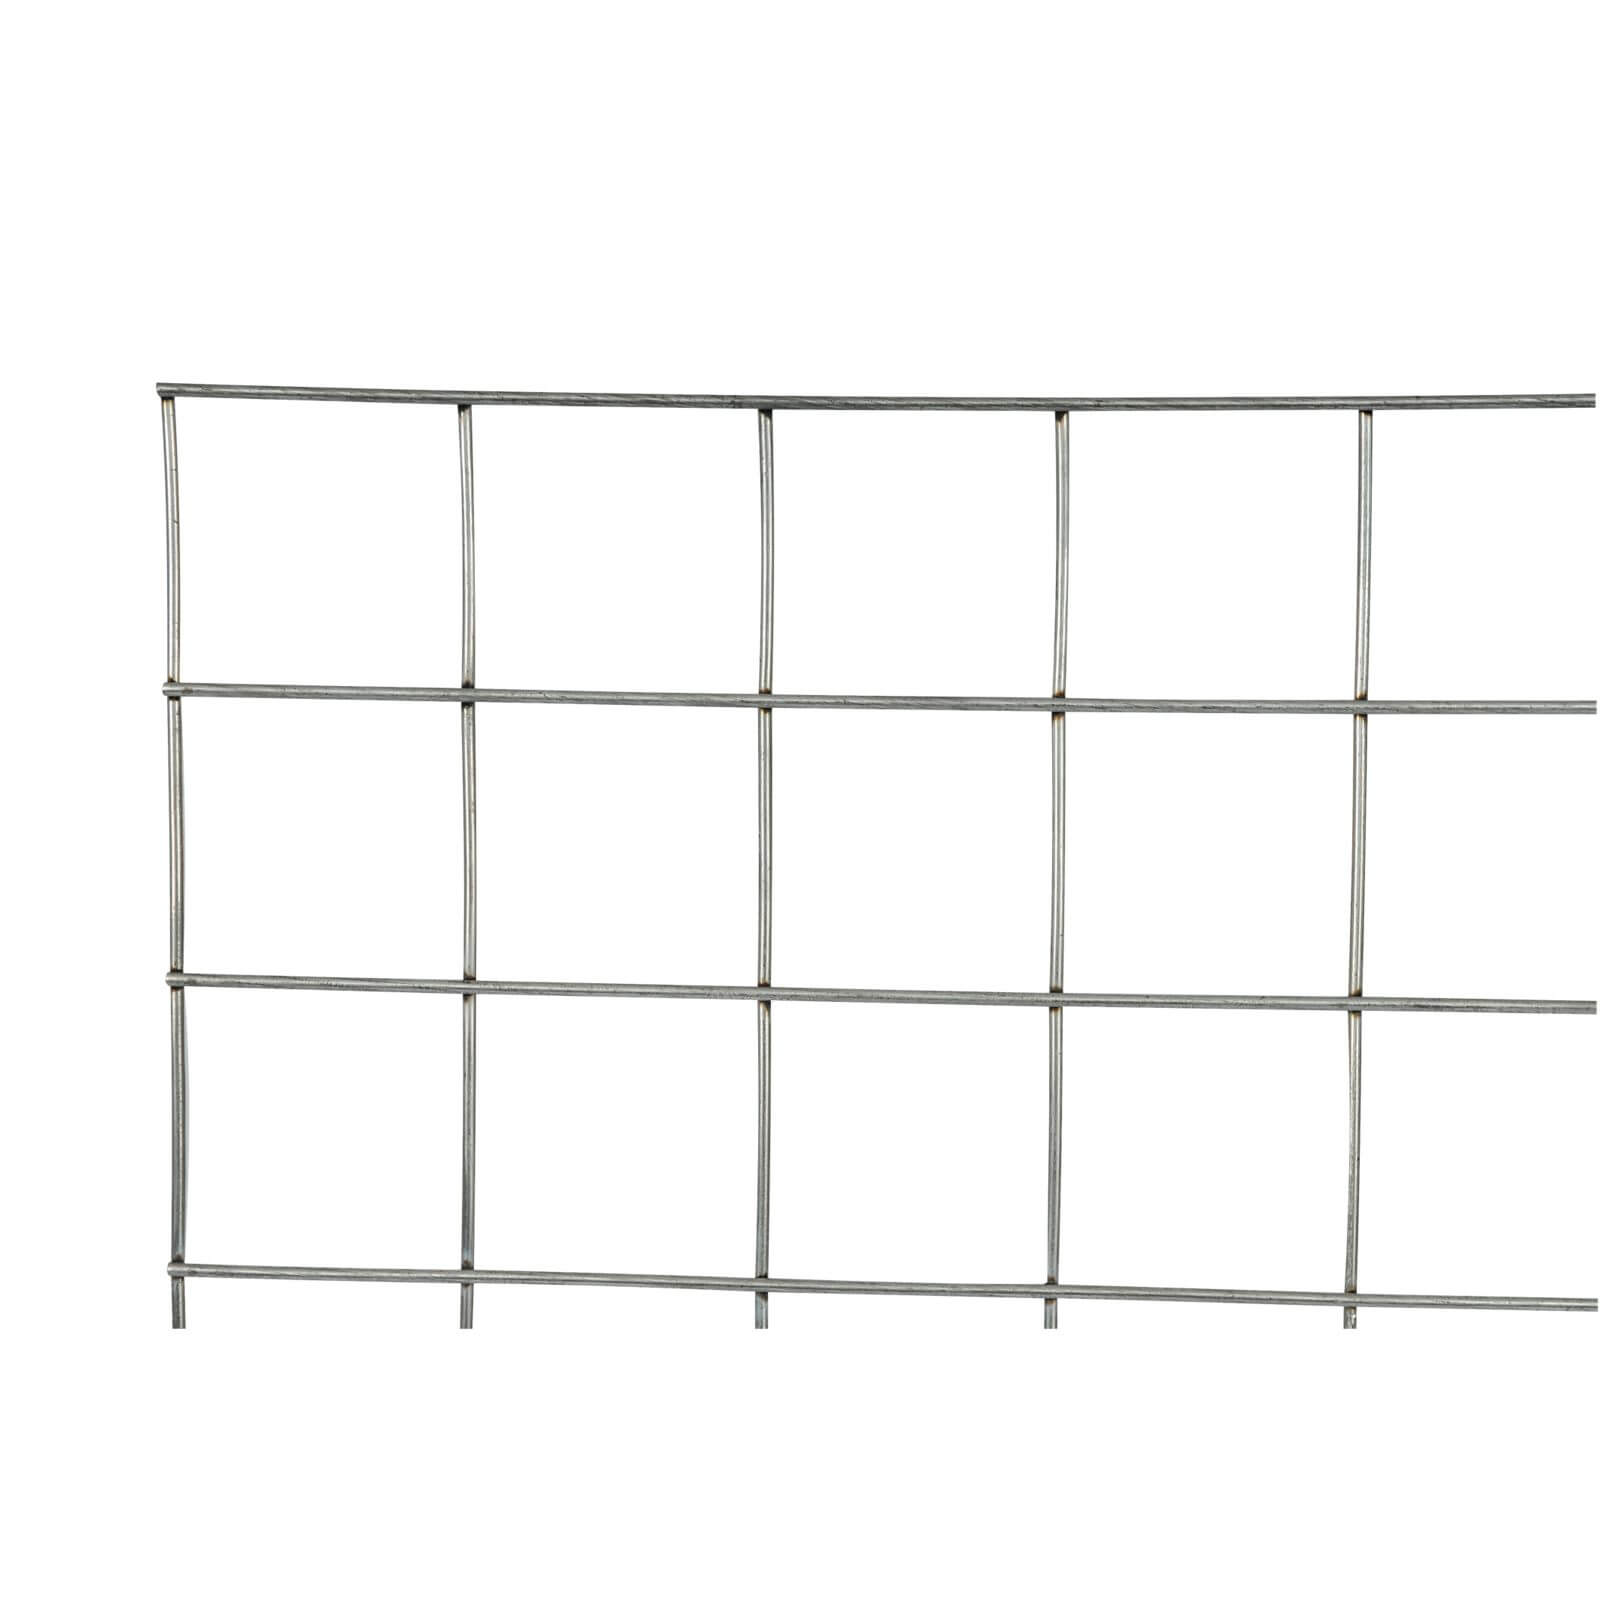 Whites Wire Mesh Panel - 180 x 90 x 0.5cm